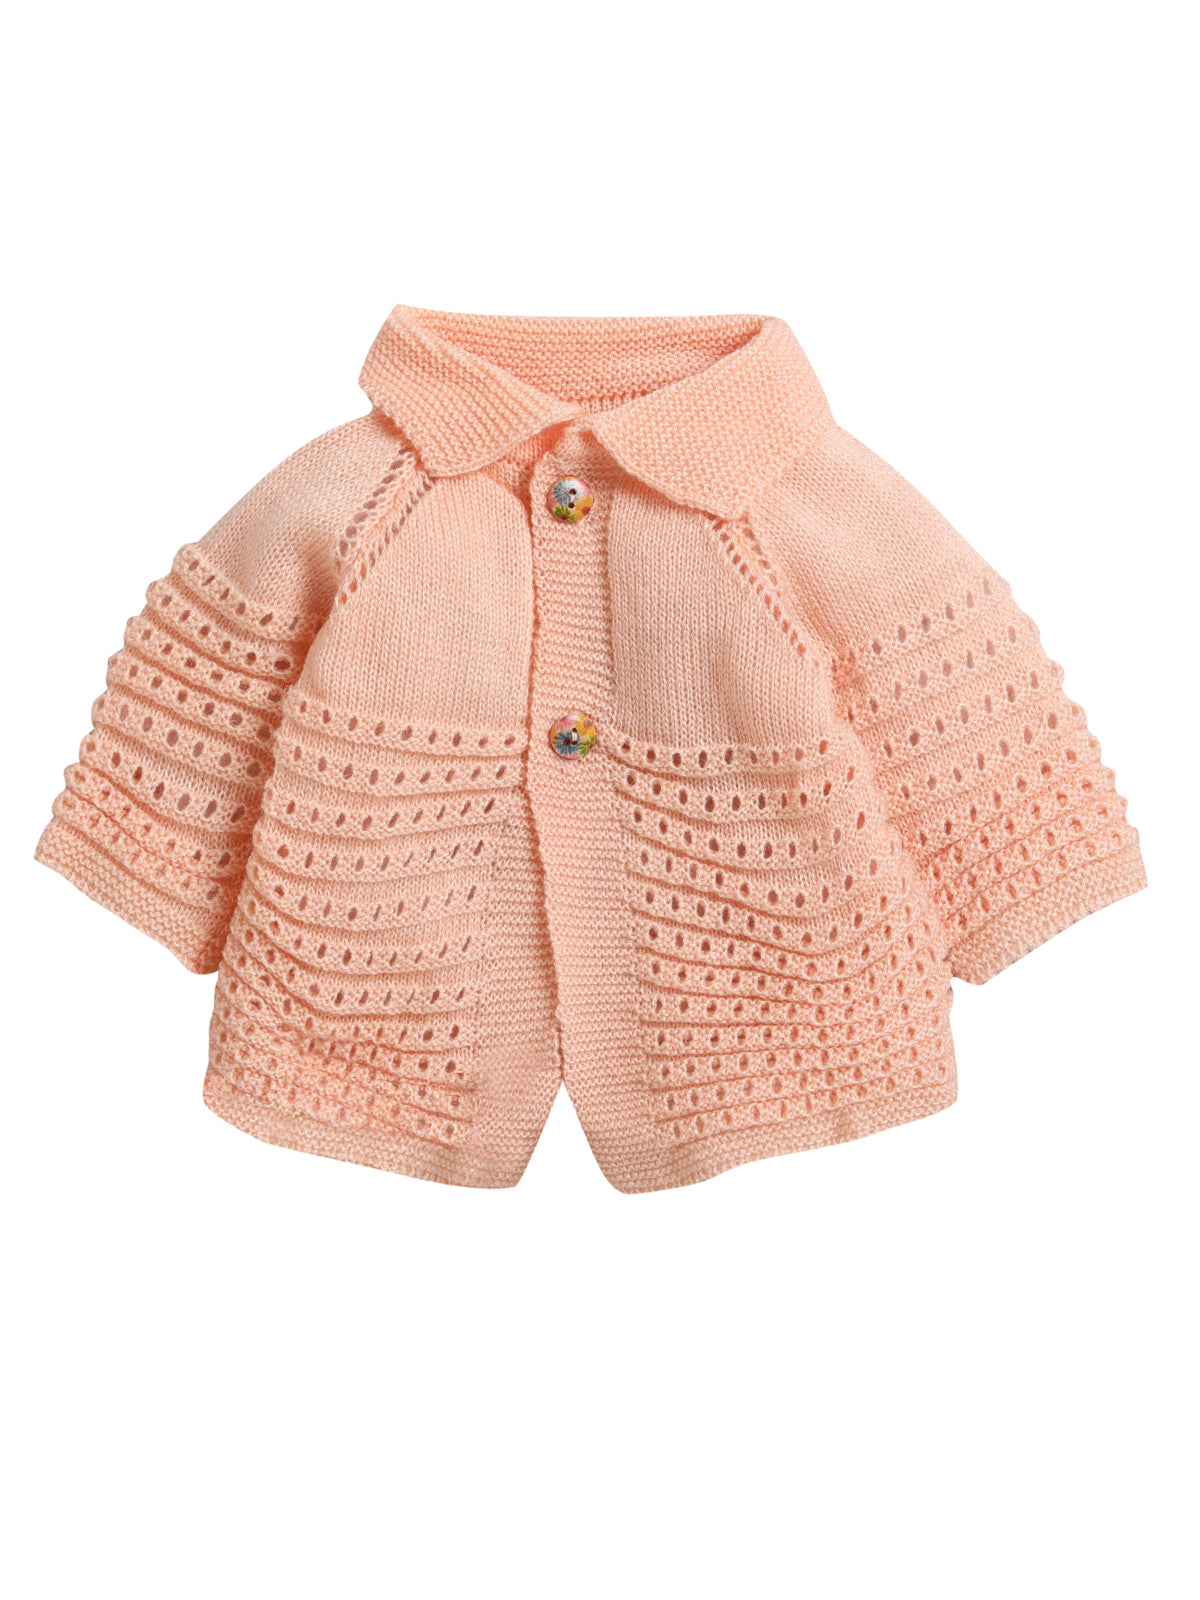 Elegant Peach Baby Girl Cardigan Sweater with Collar Neck